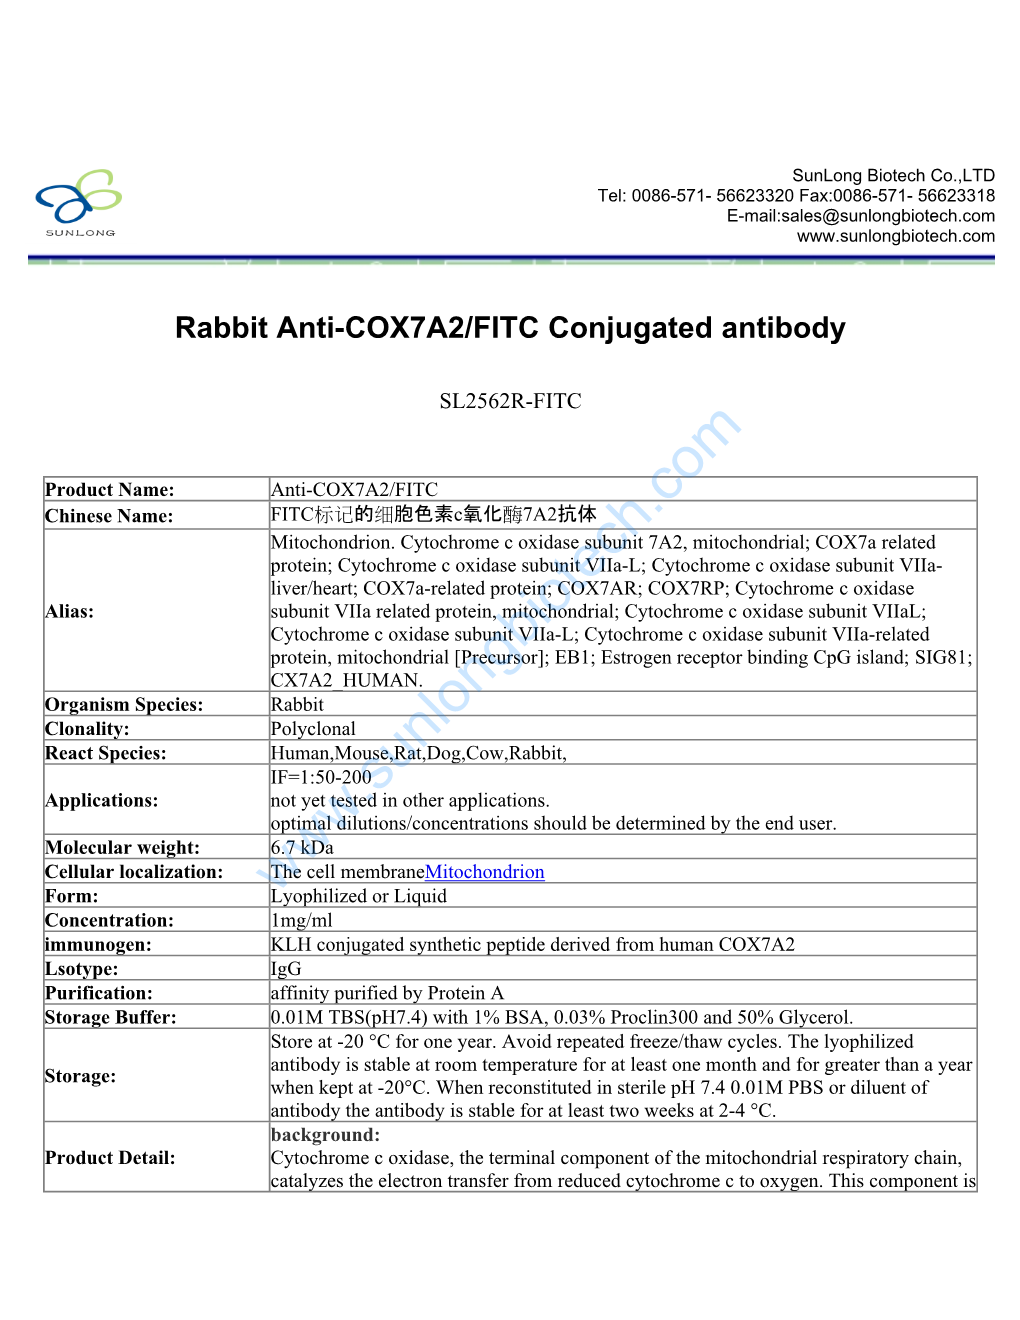 Rabbit Anti-COX7A2/FITC Conjugated Antibody